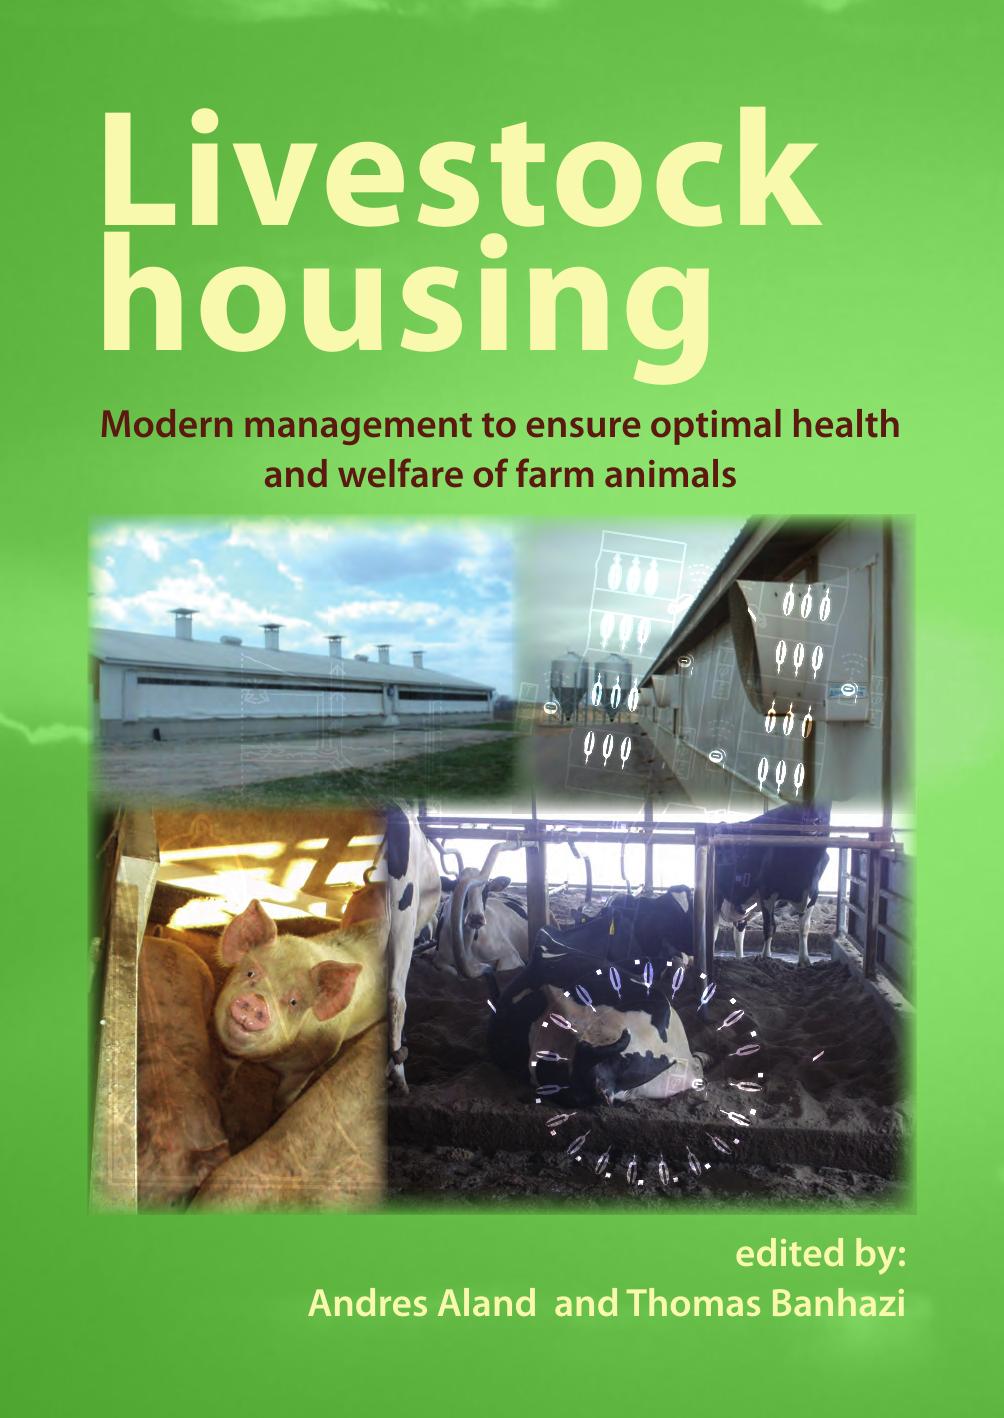 Livestock housing